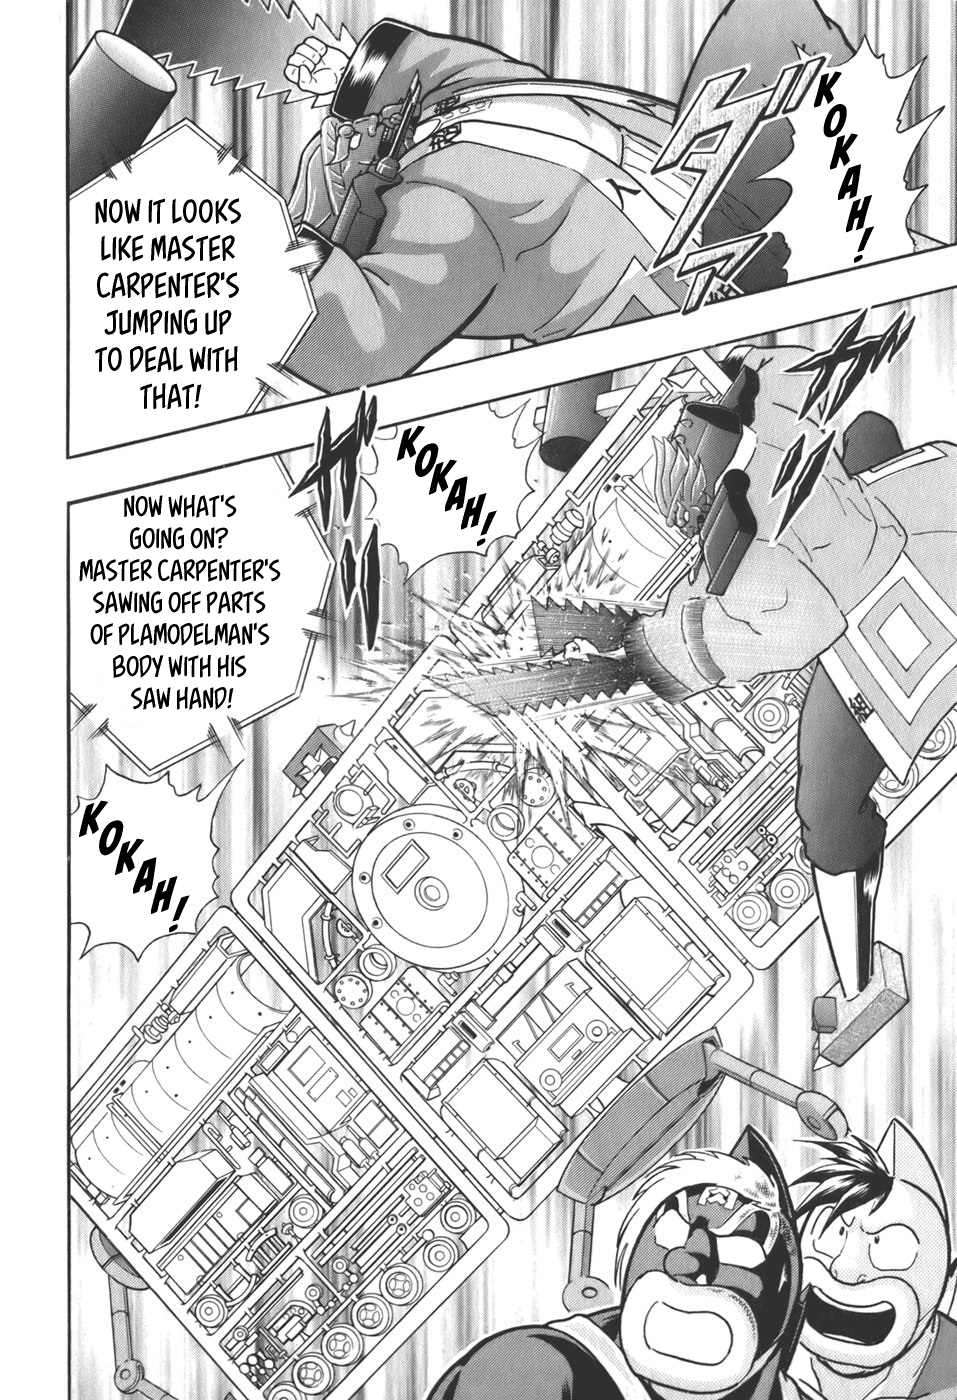 Kinnikuman Nisei: Ultimate Chojin Tag Vol. 6 Ch. 60 A Head On Clash of Chojin Power!